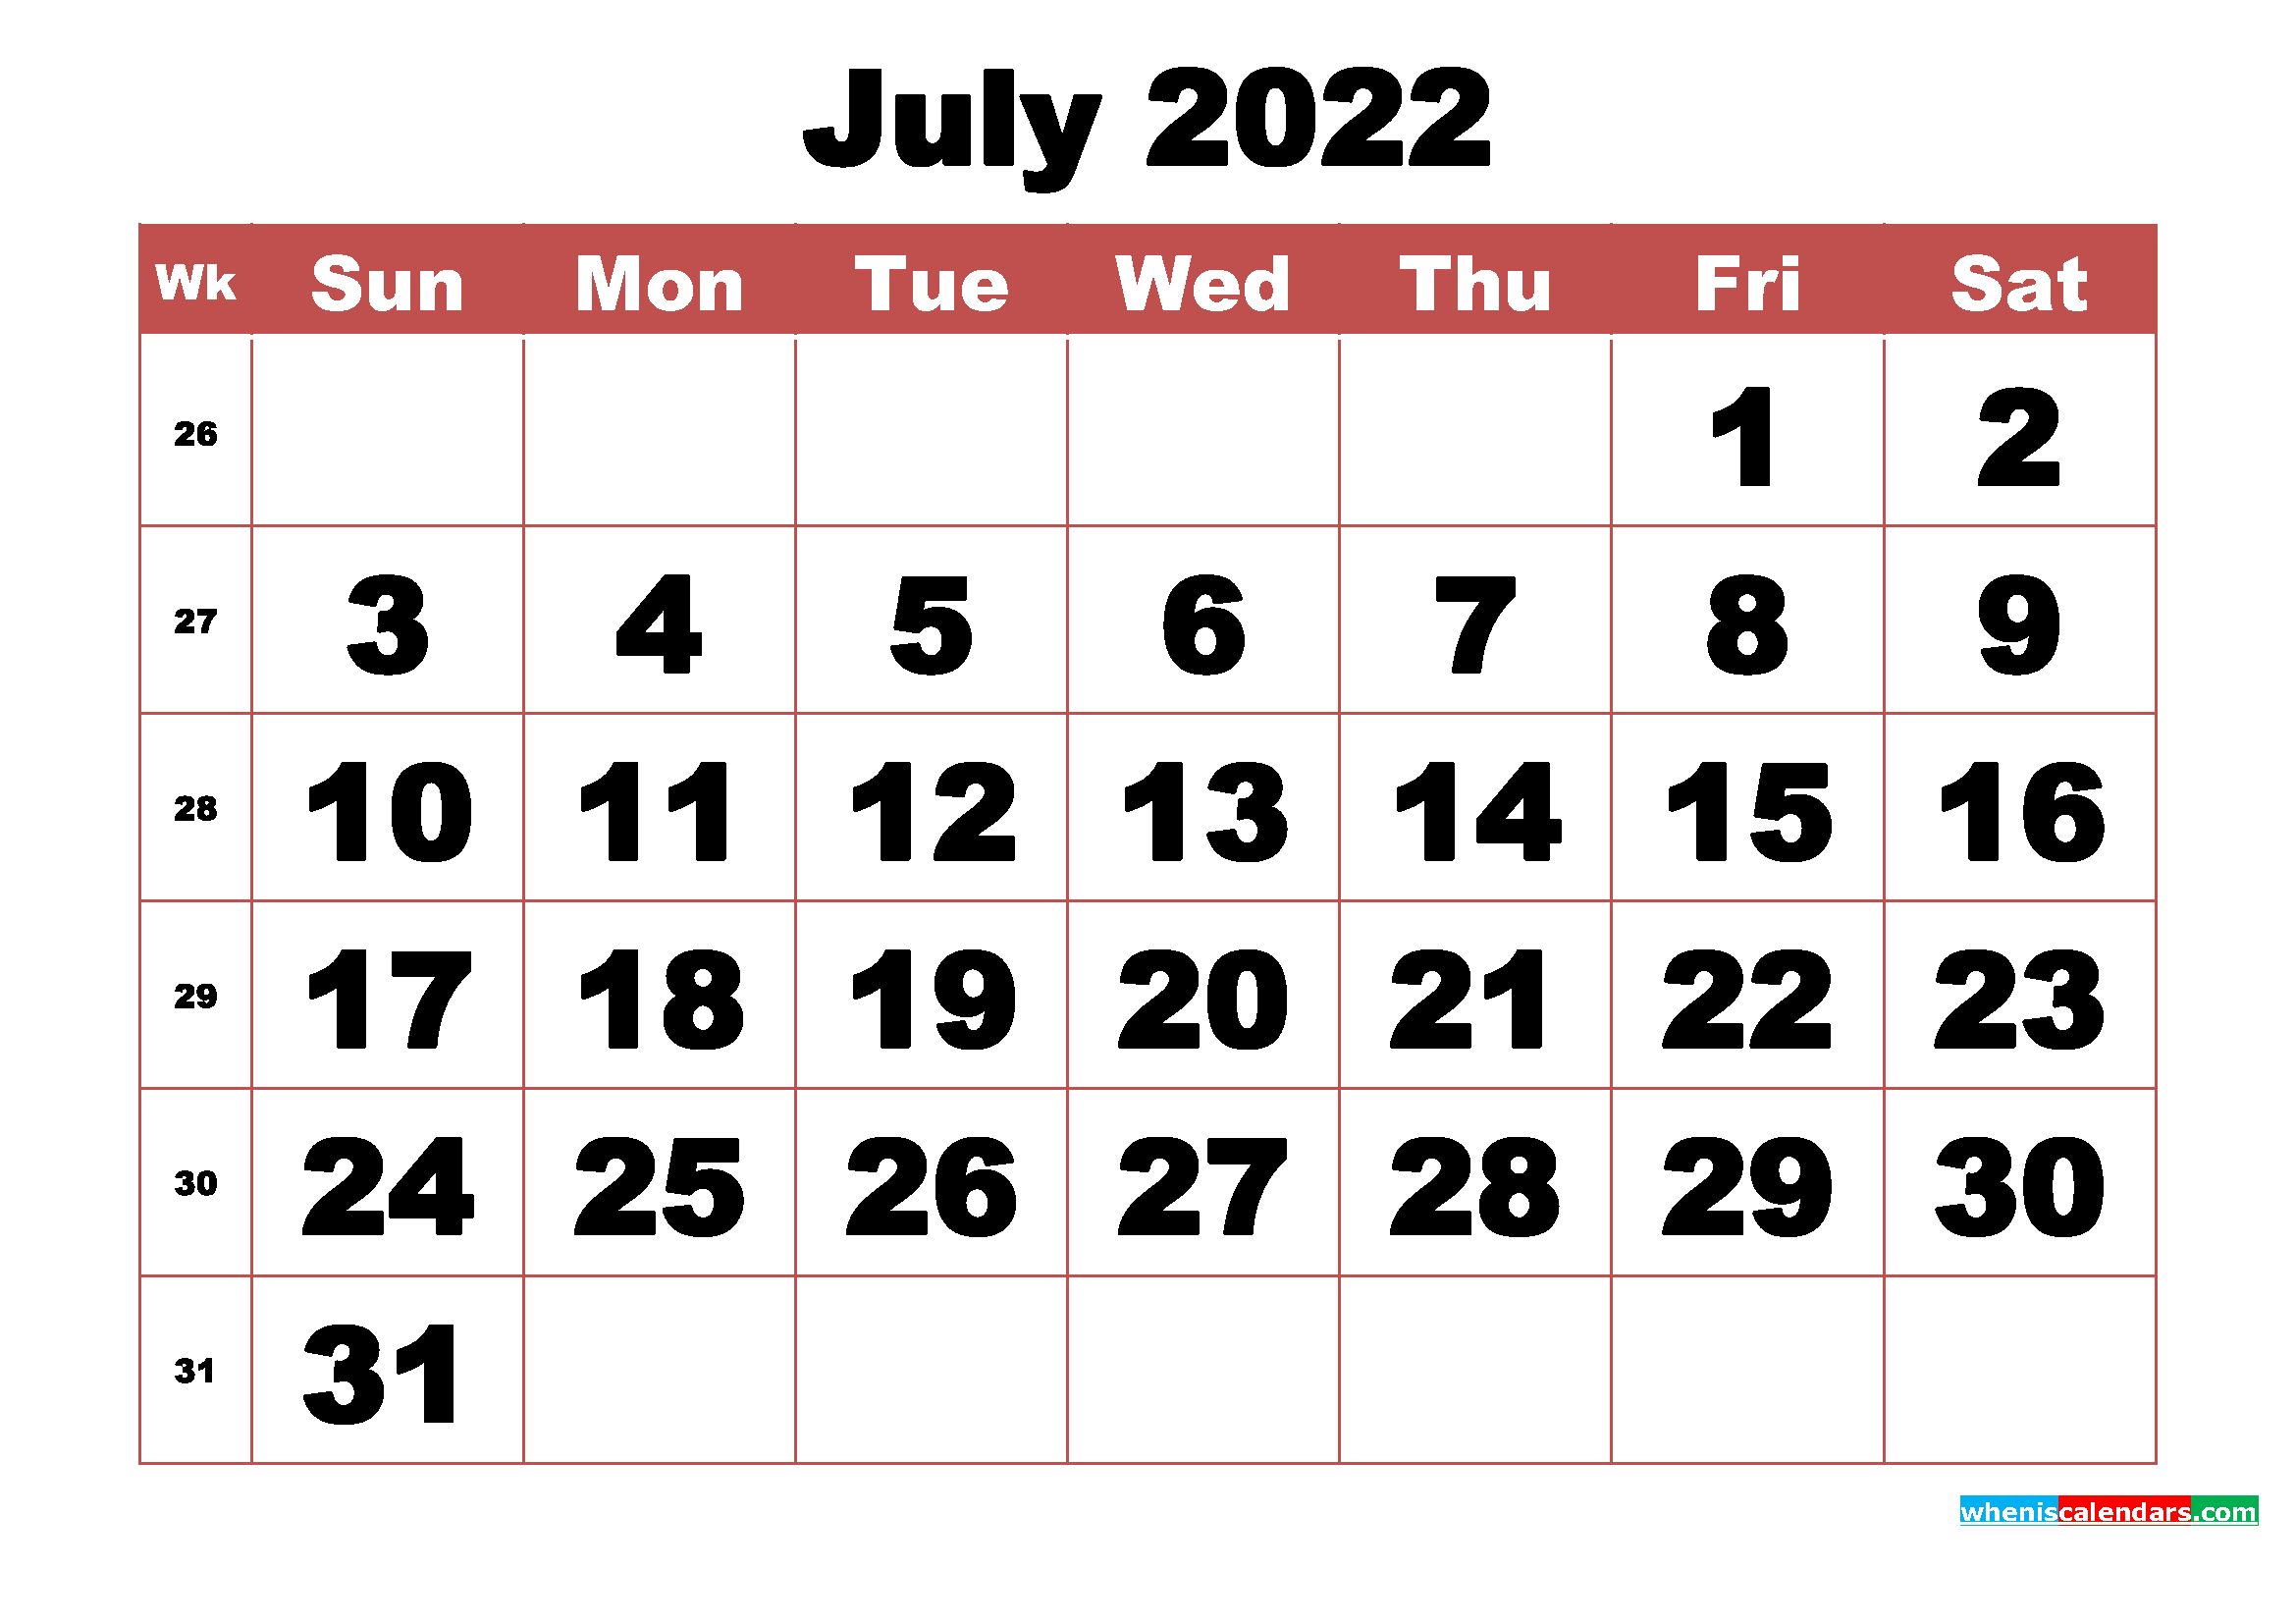 customized-sierra-feb-calendar-july-2022-calendar-cute-print-november